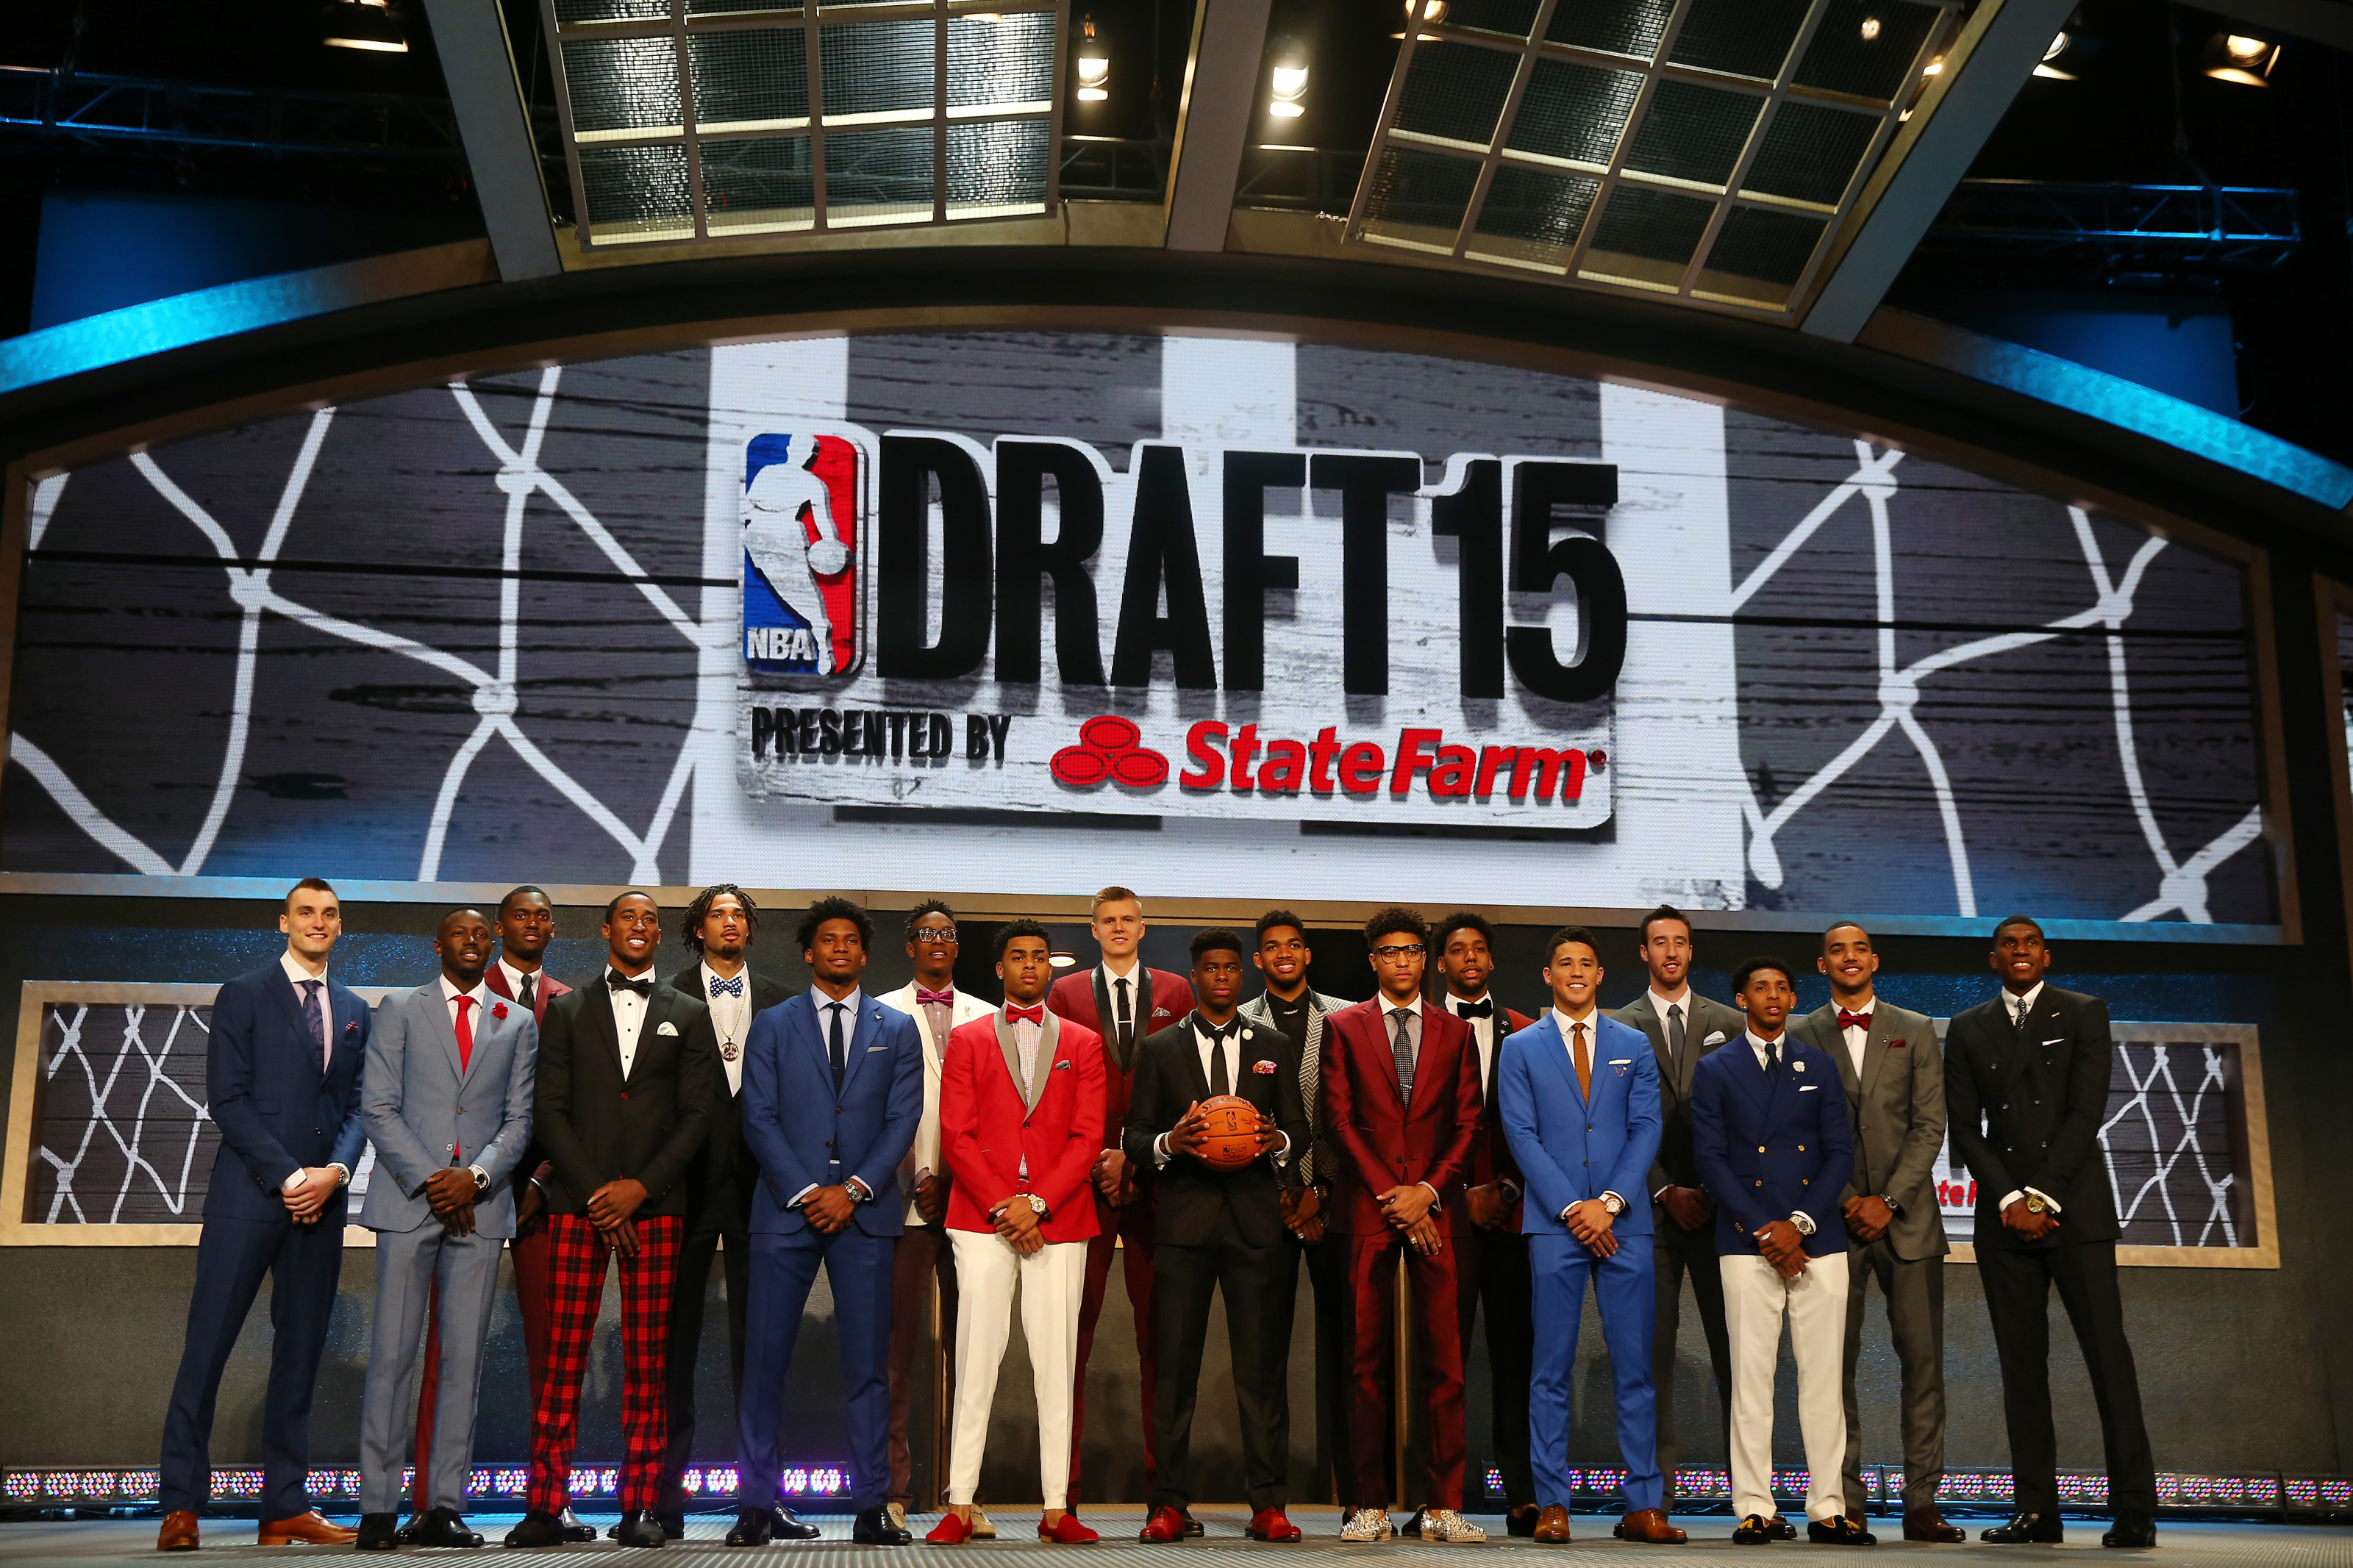 2015 draft